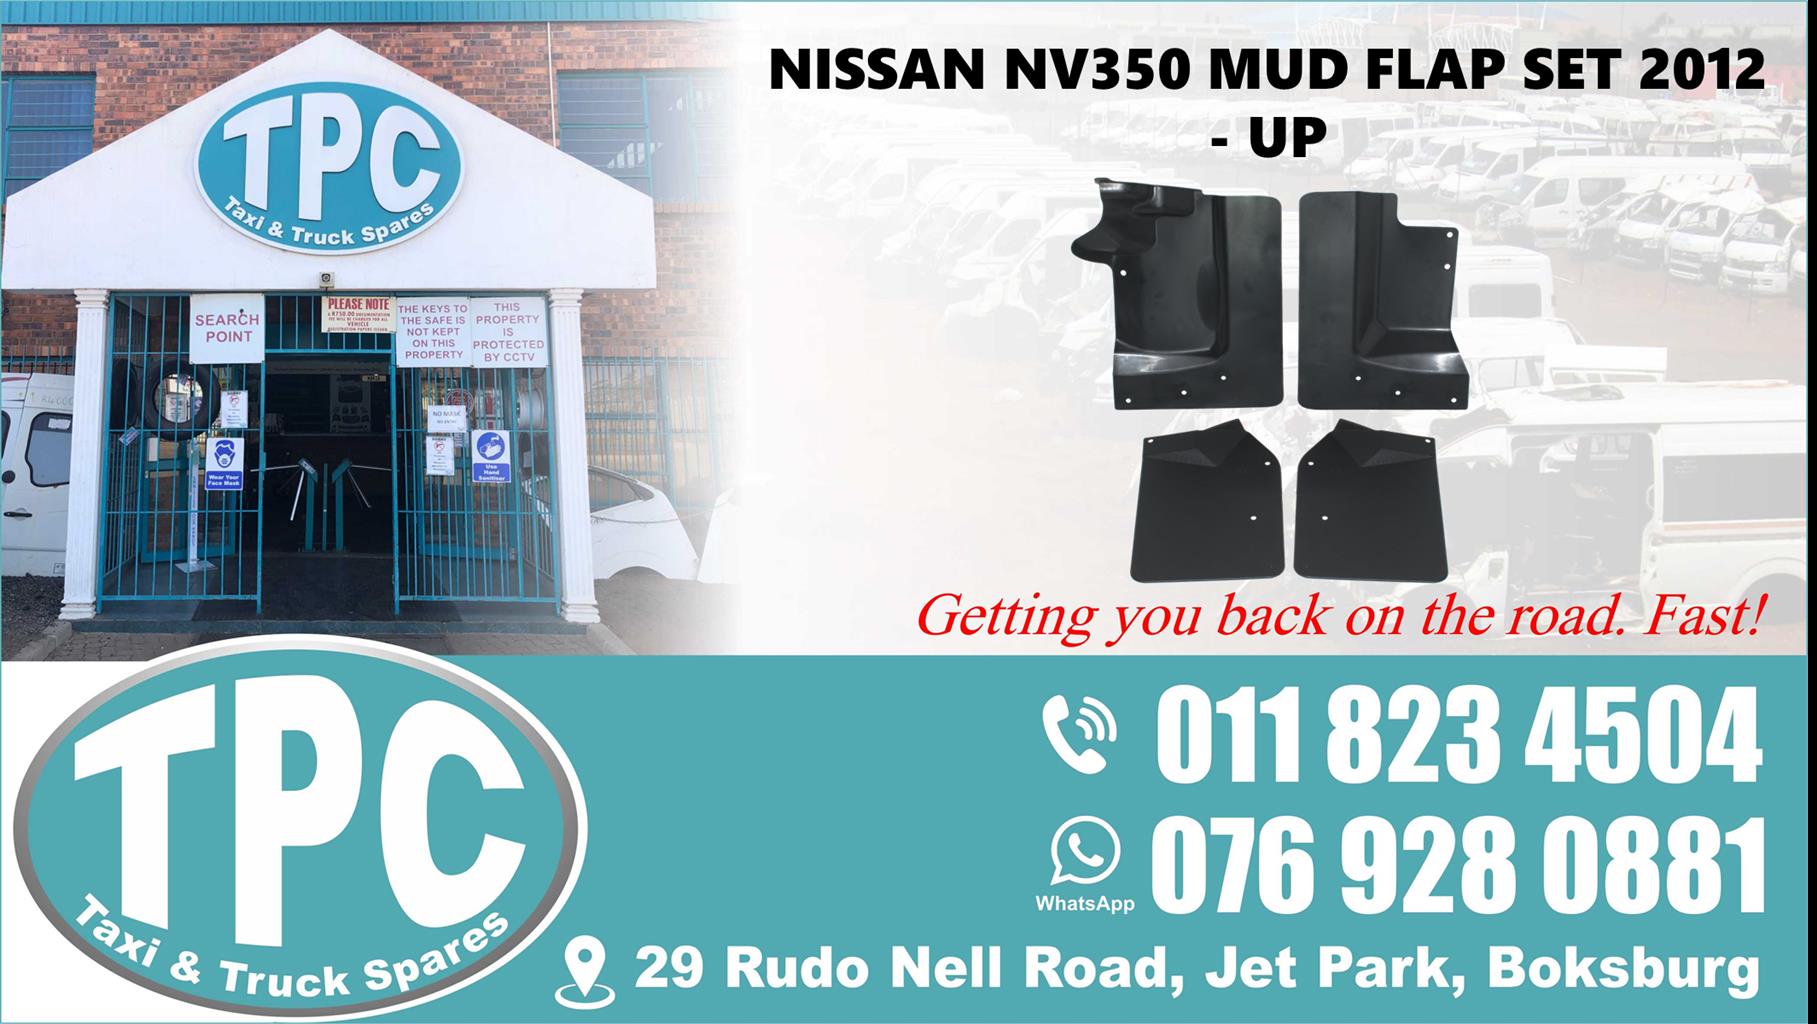 Nissan NV350 Mud Flap Set 2012 - Up - For Sale at TPC